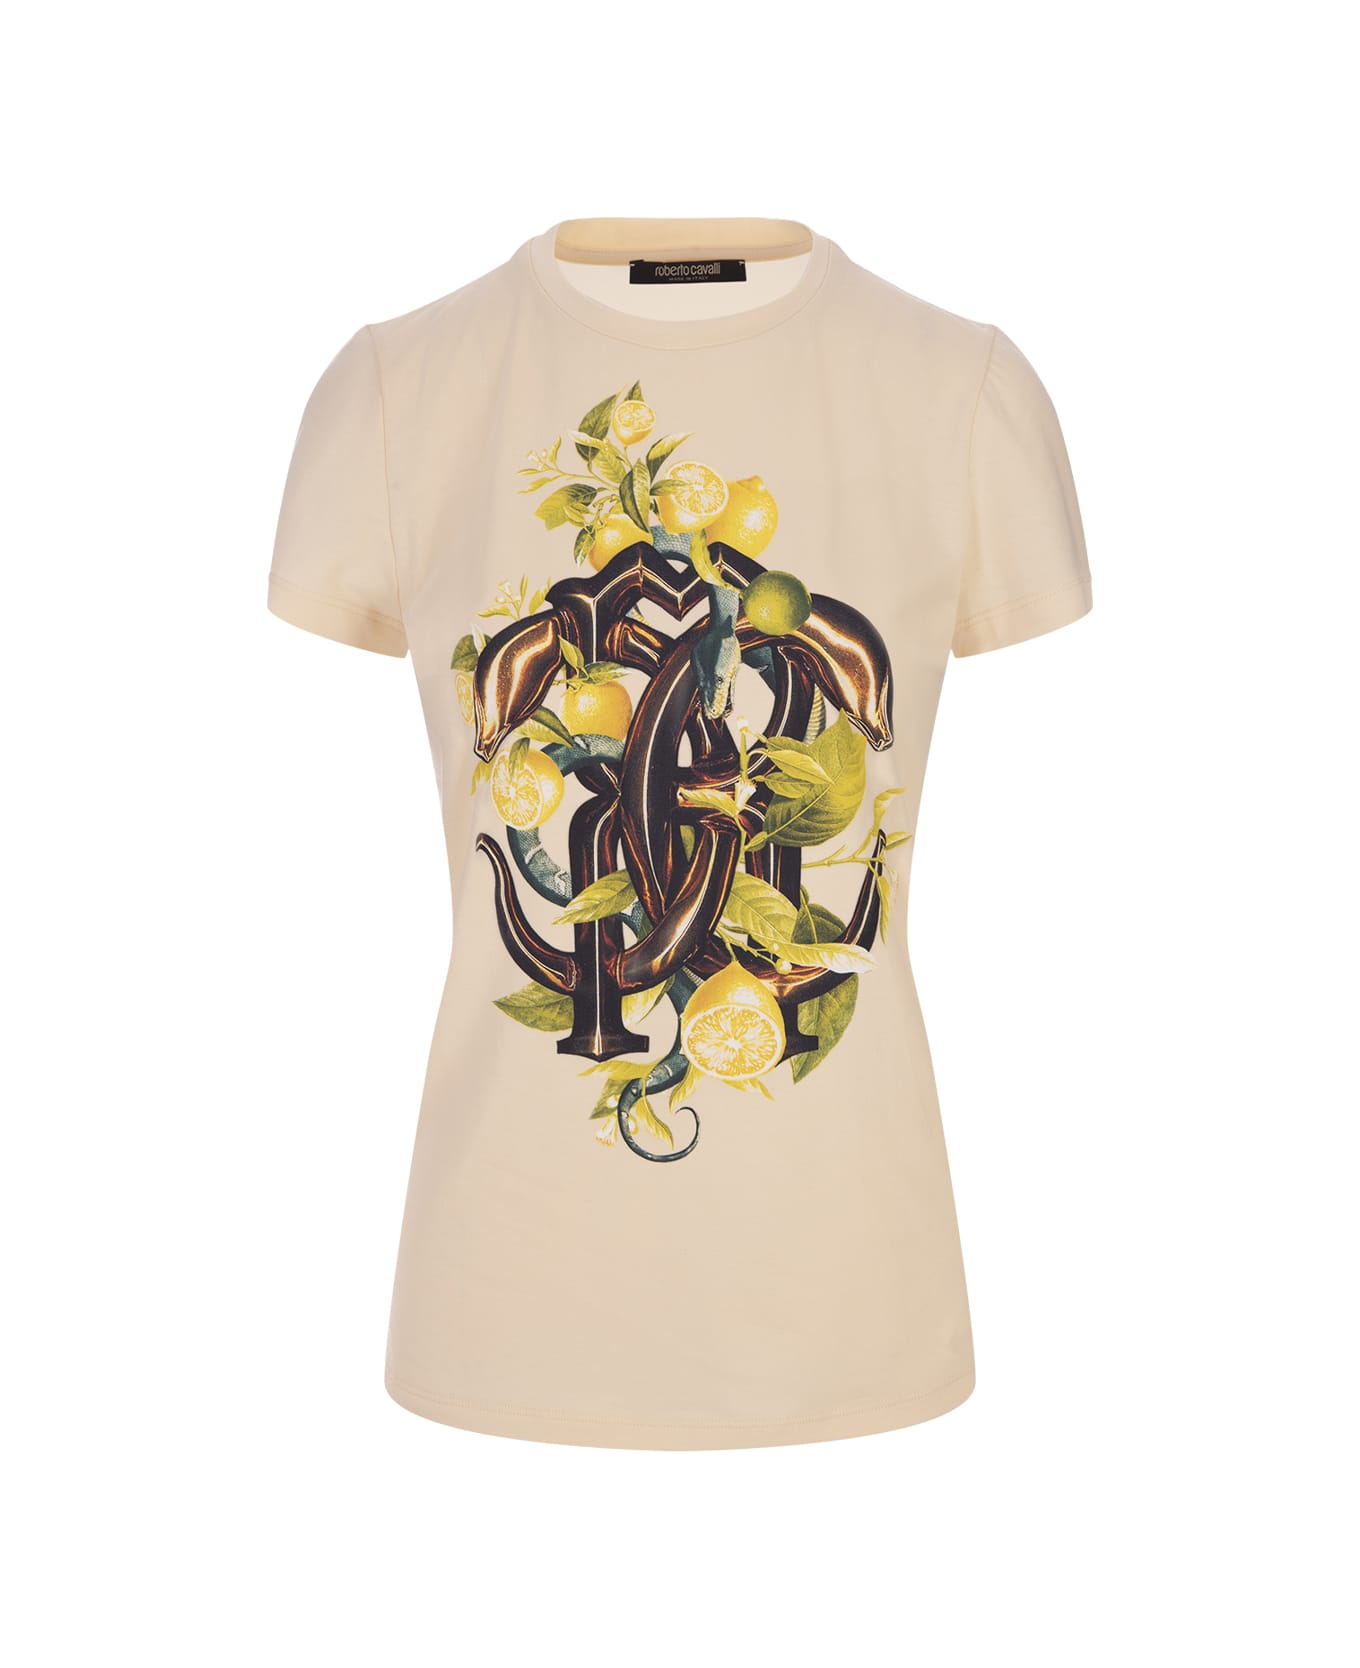 Roberto Cavalli Ivory T-shirt With Lemons And Snake Print - White Tシャツ